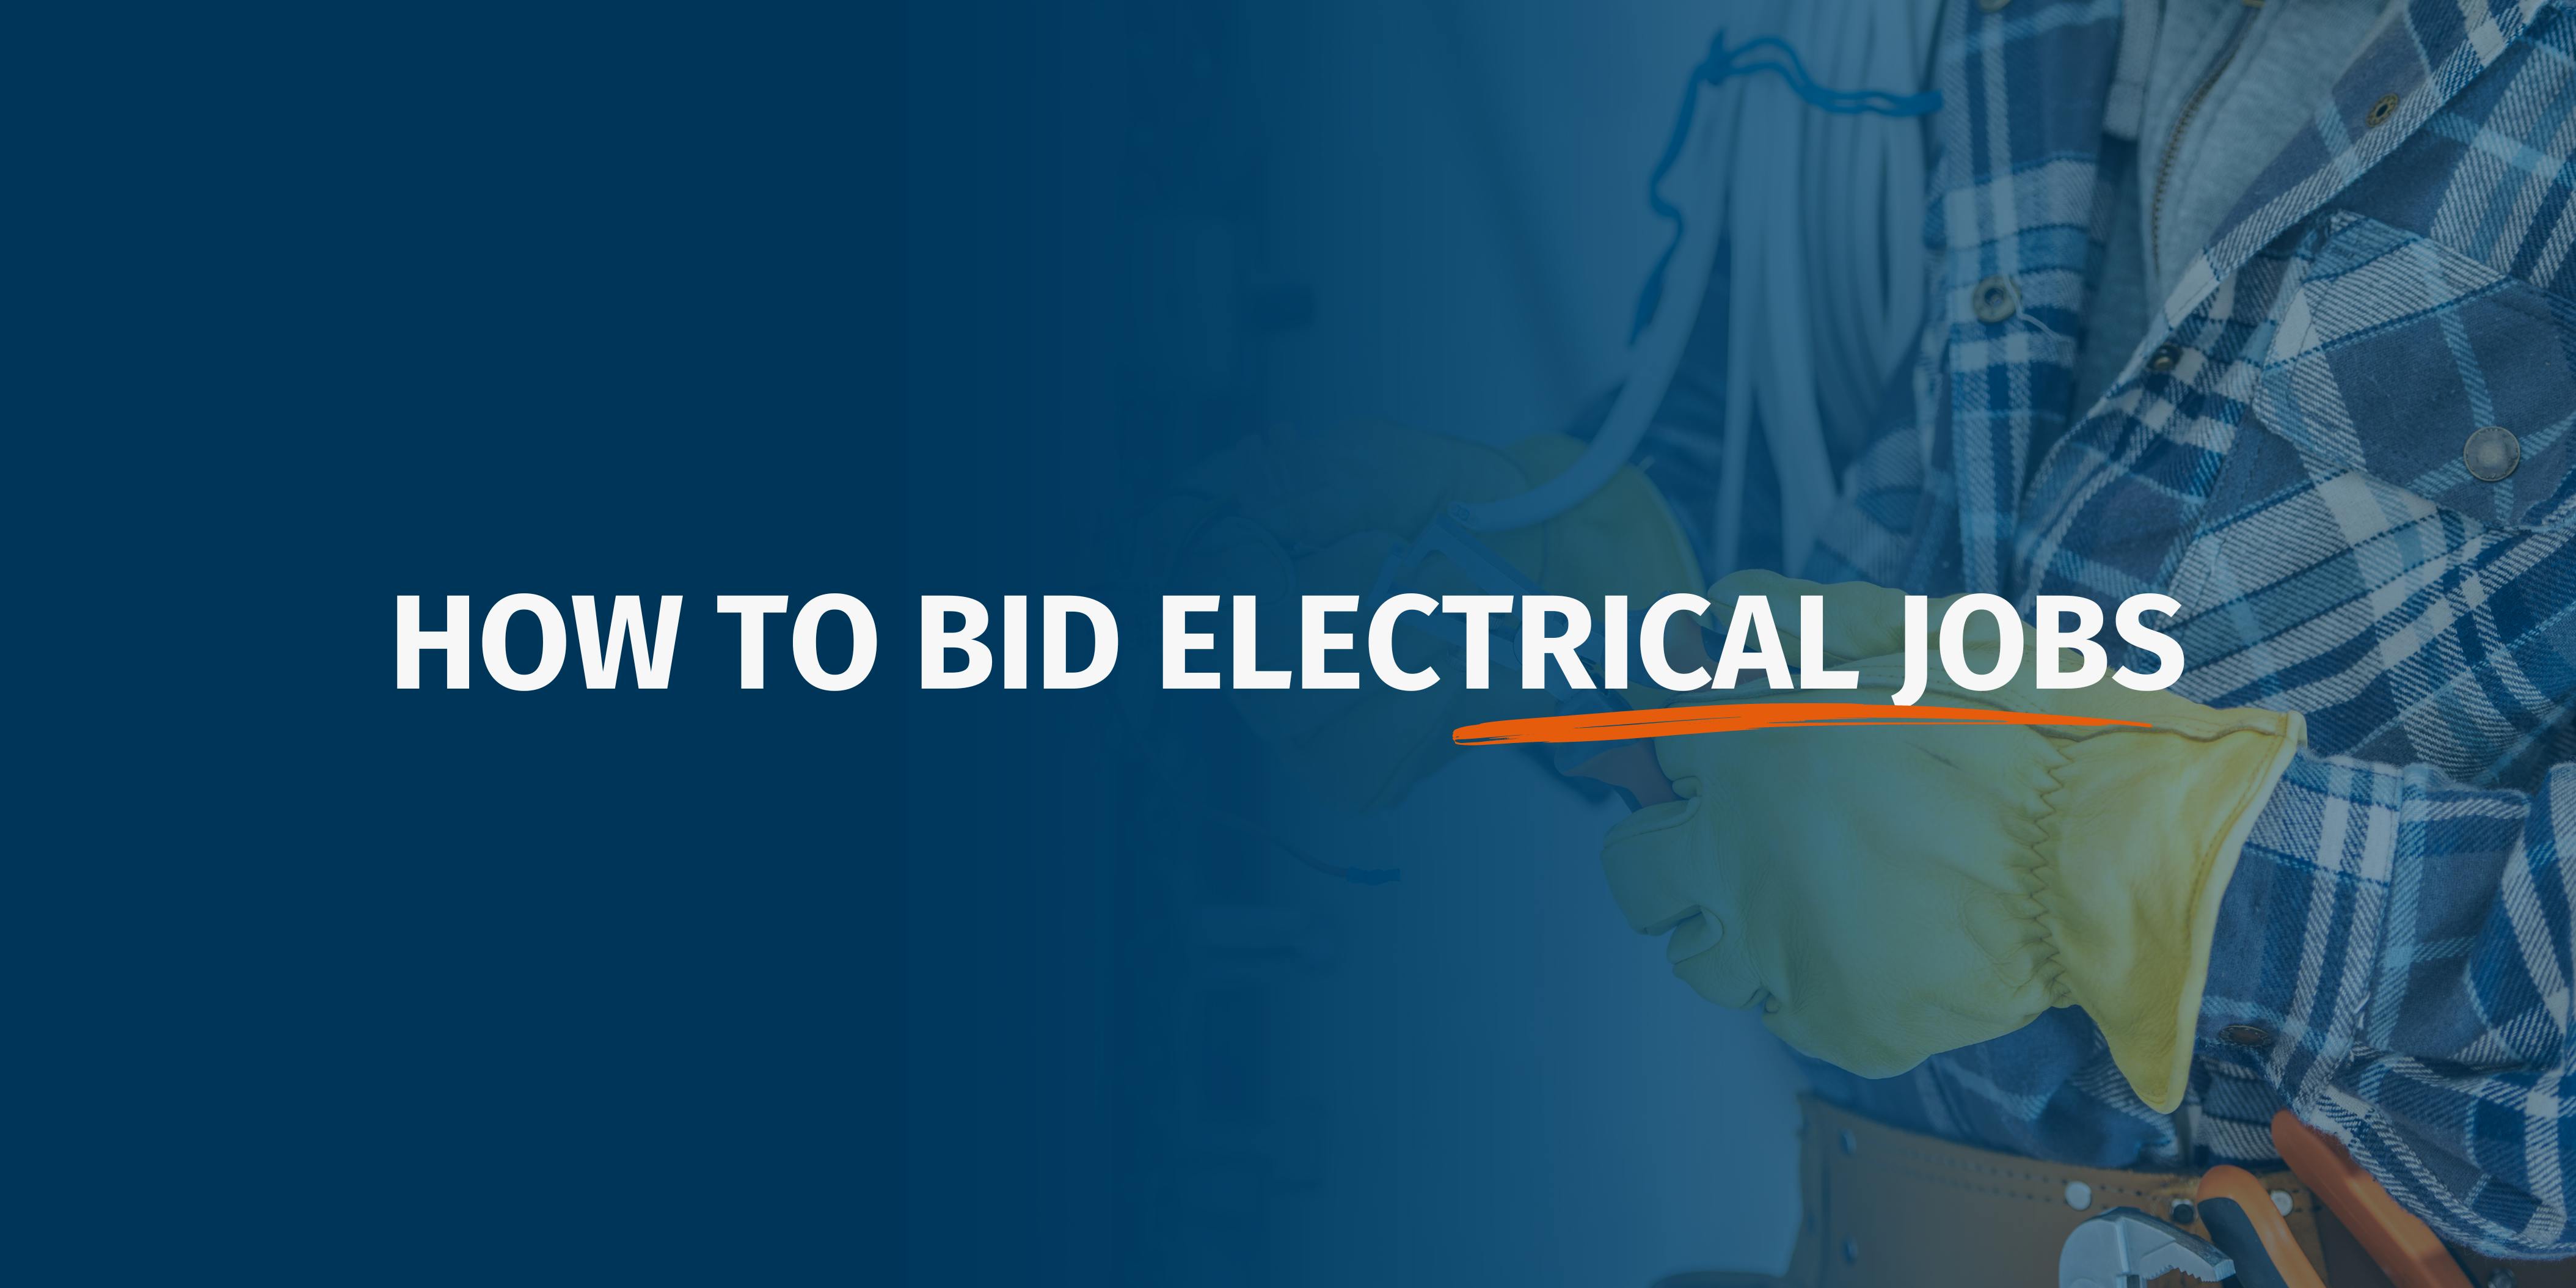 How to Bid Electrical Jobs